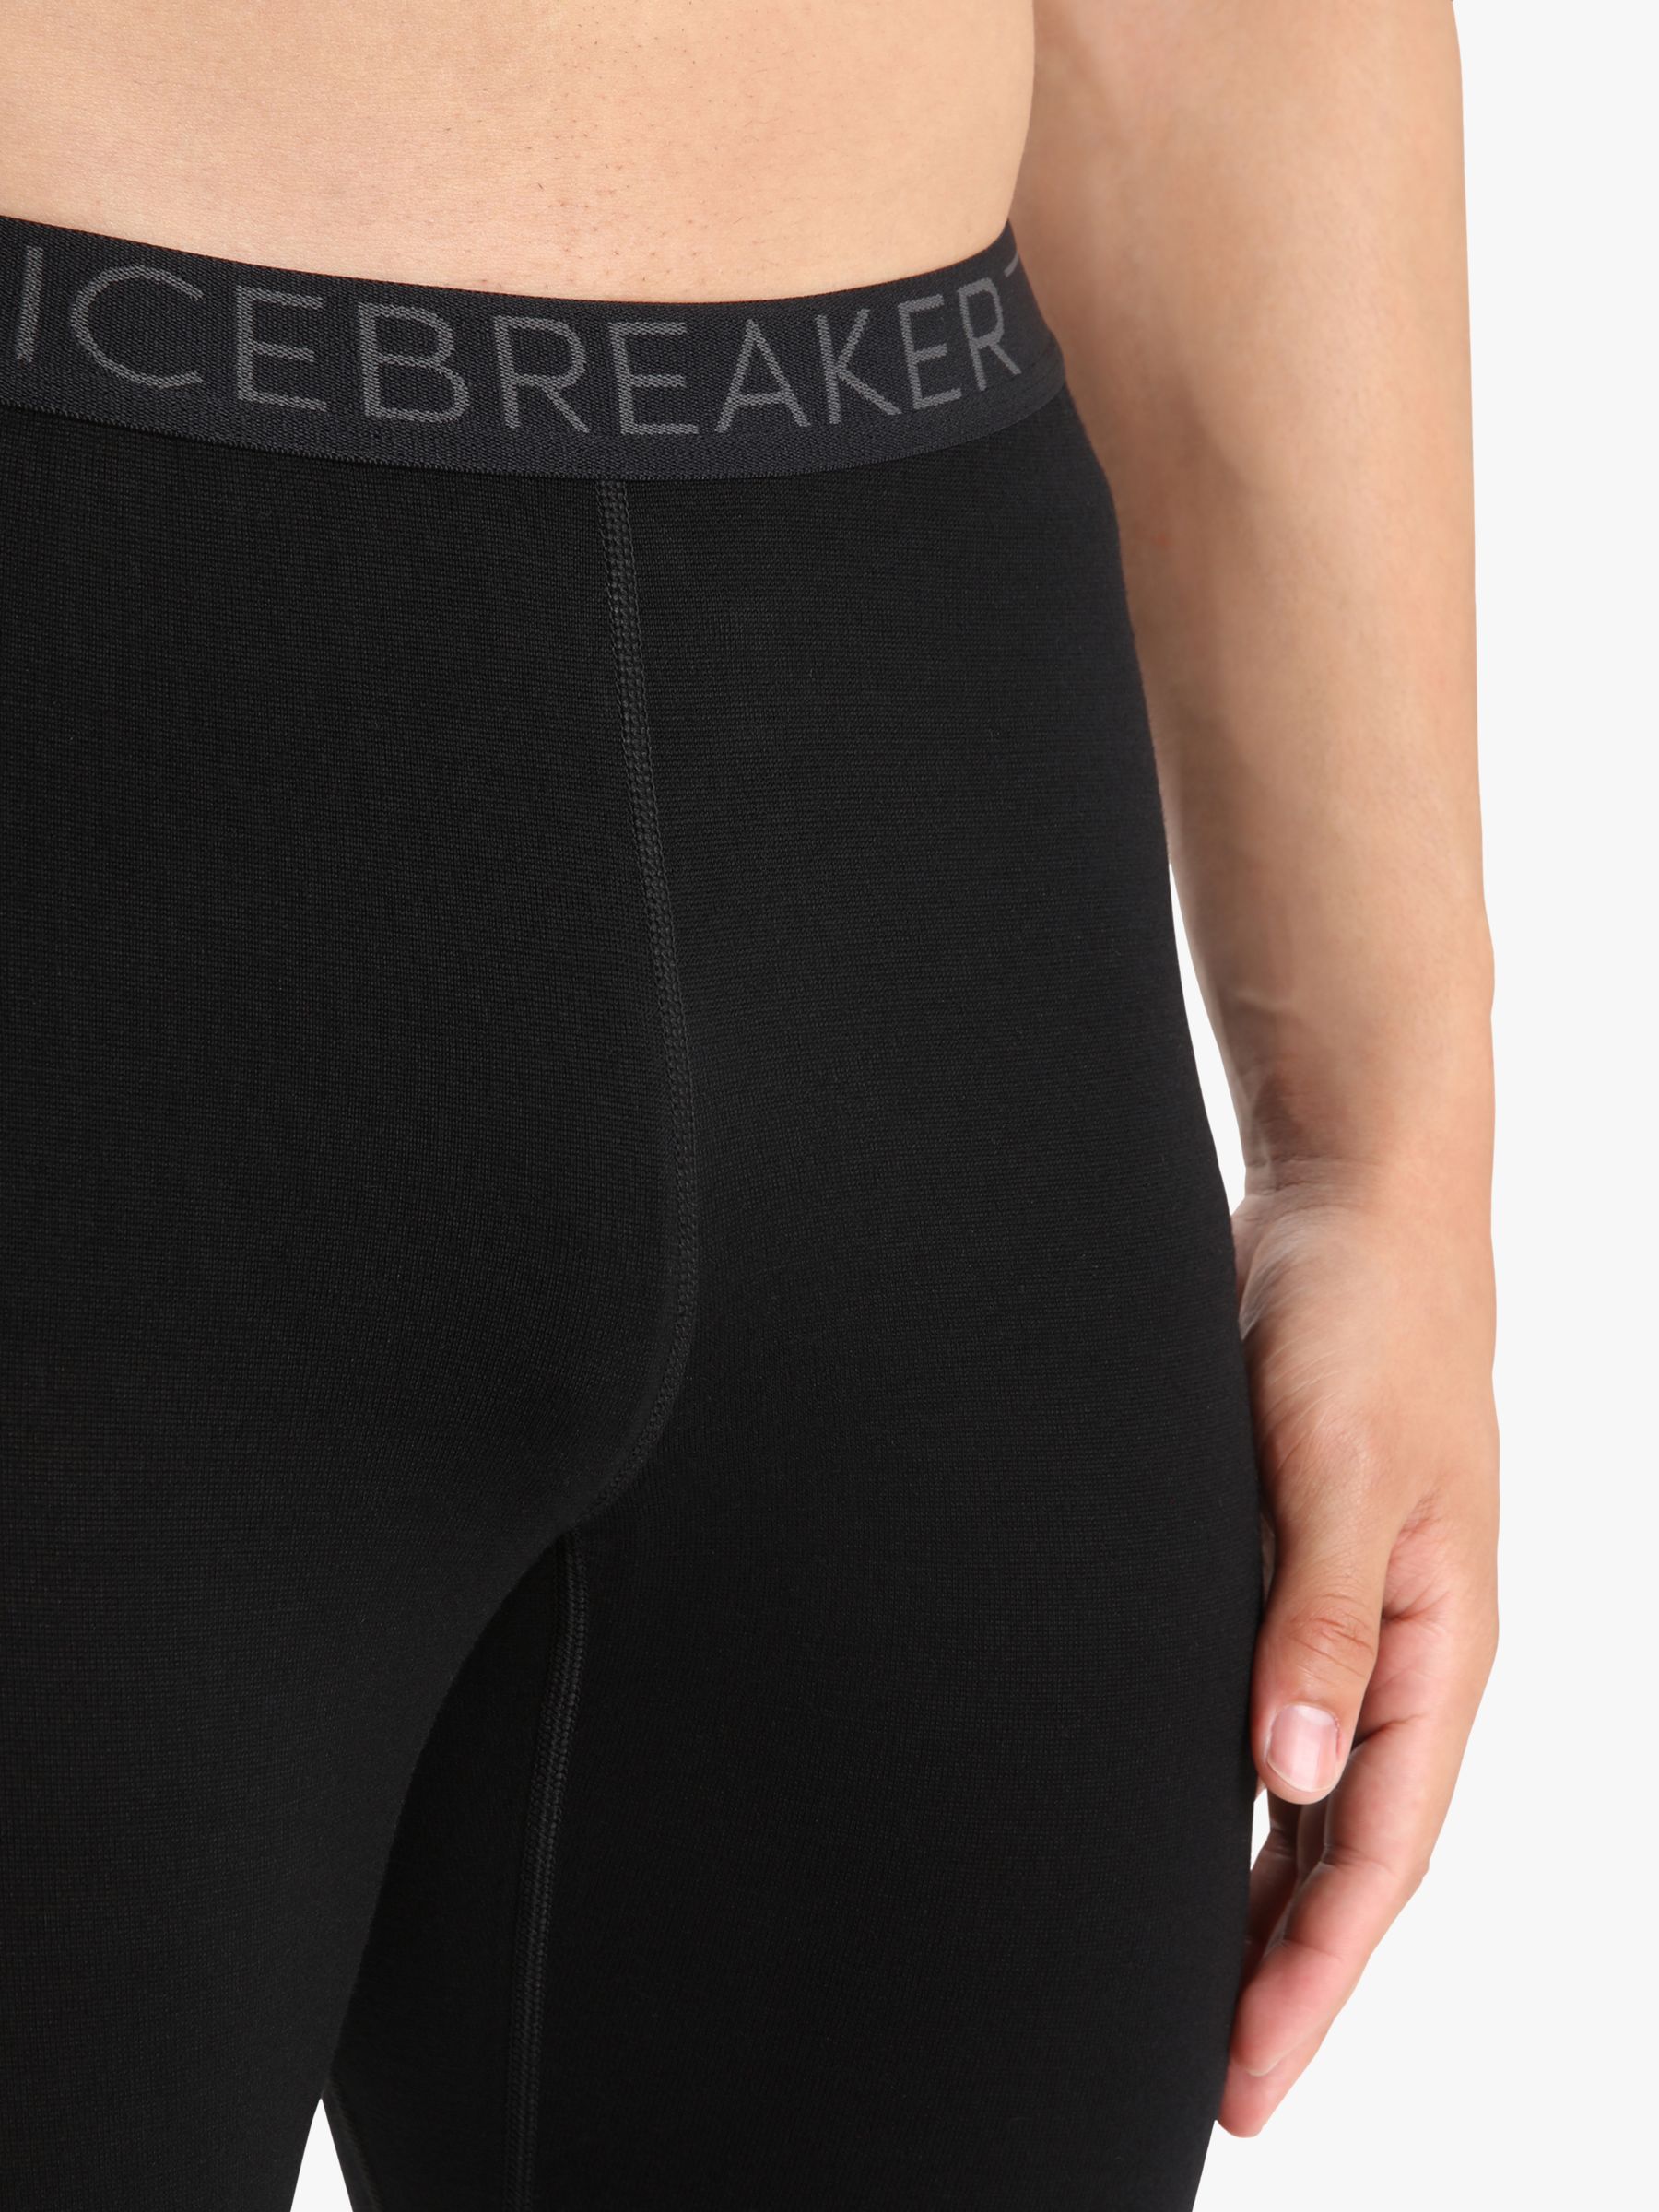 Icebreaker Men's 260 Tech Merino Thermal Leggings, Black, XL